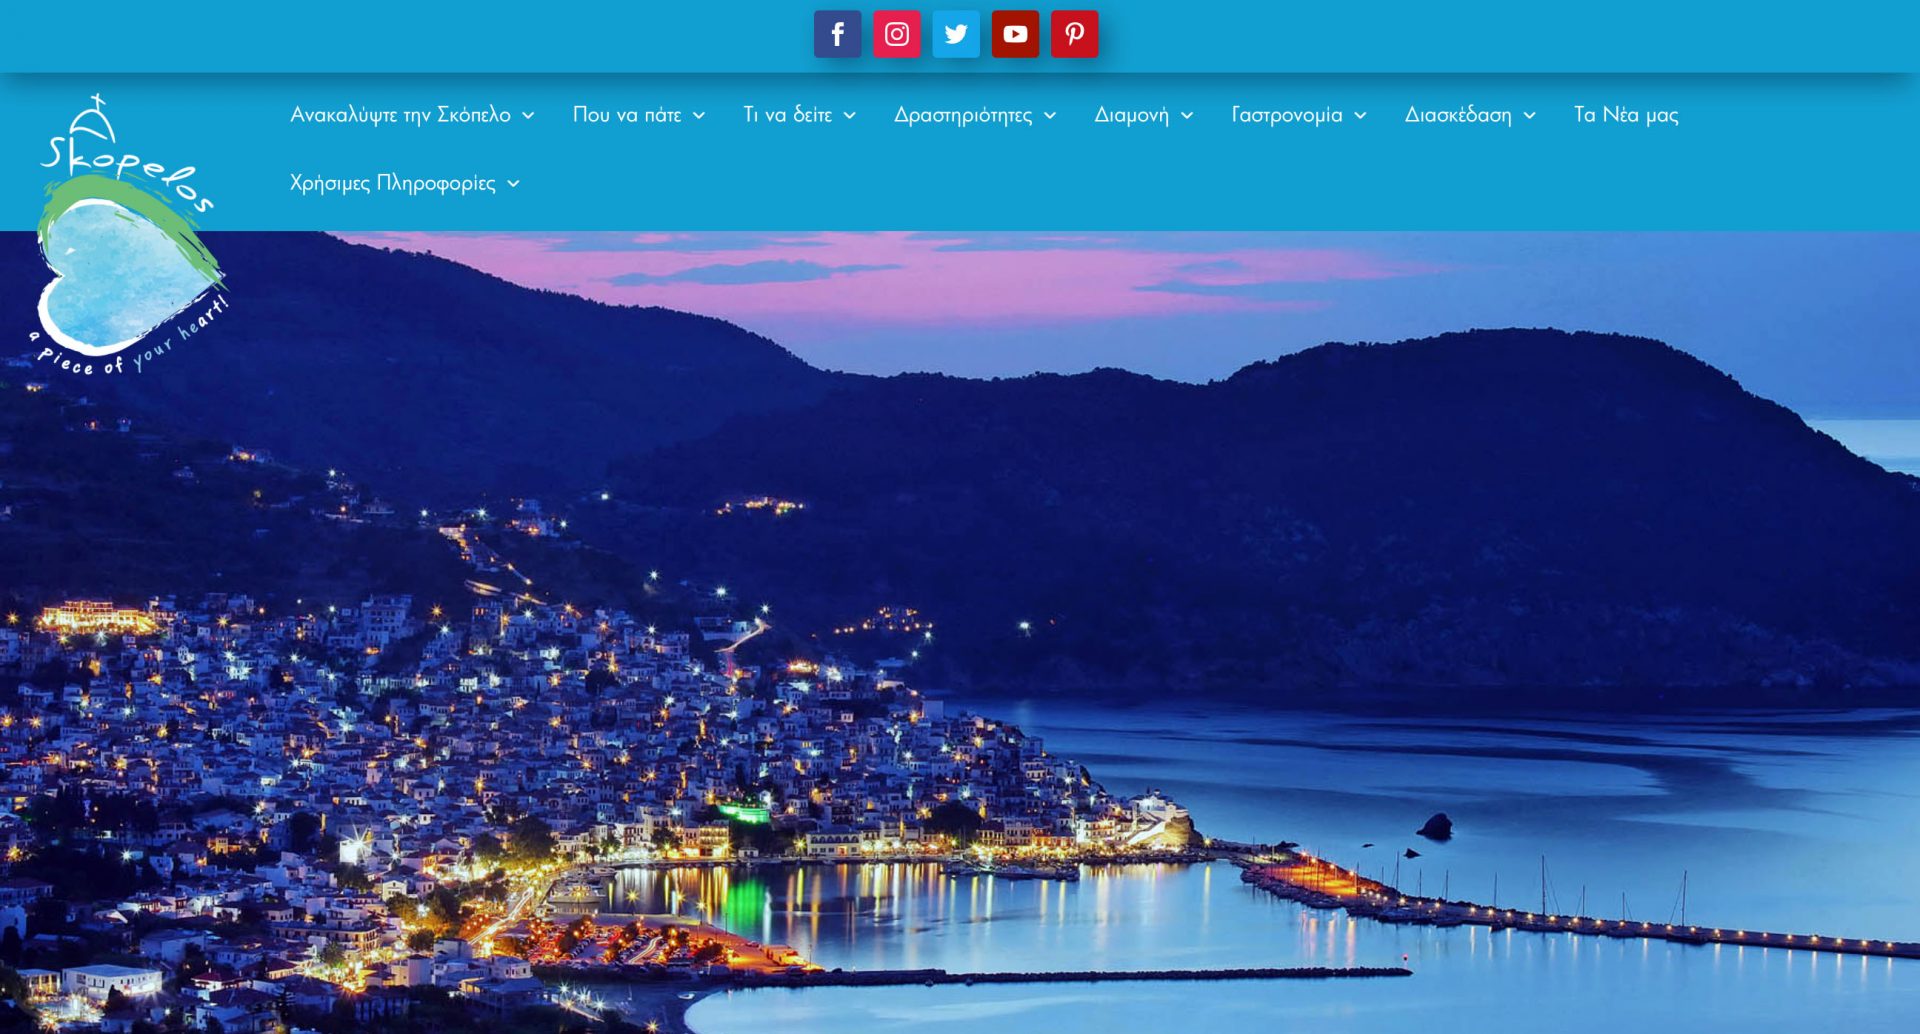 Skopelos Website 2